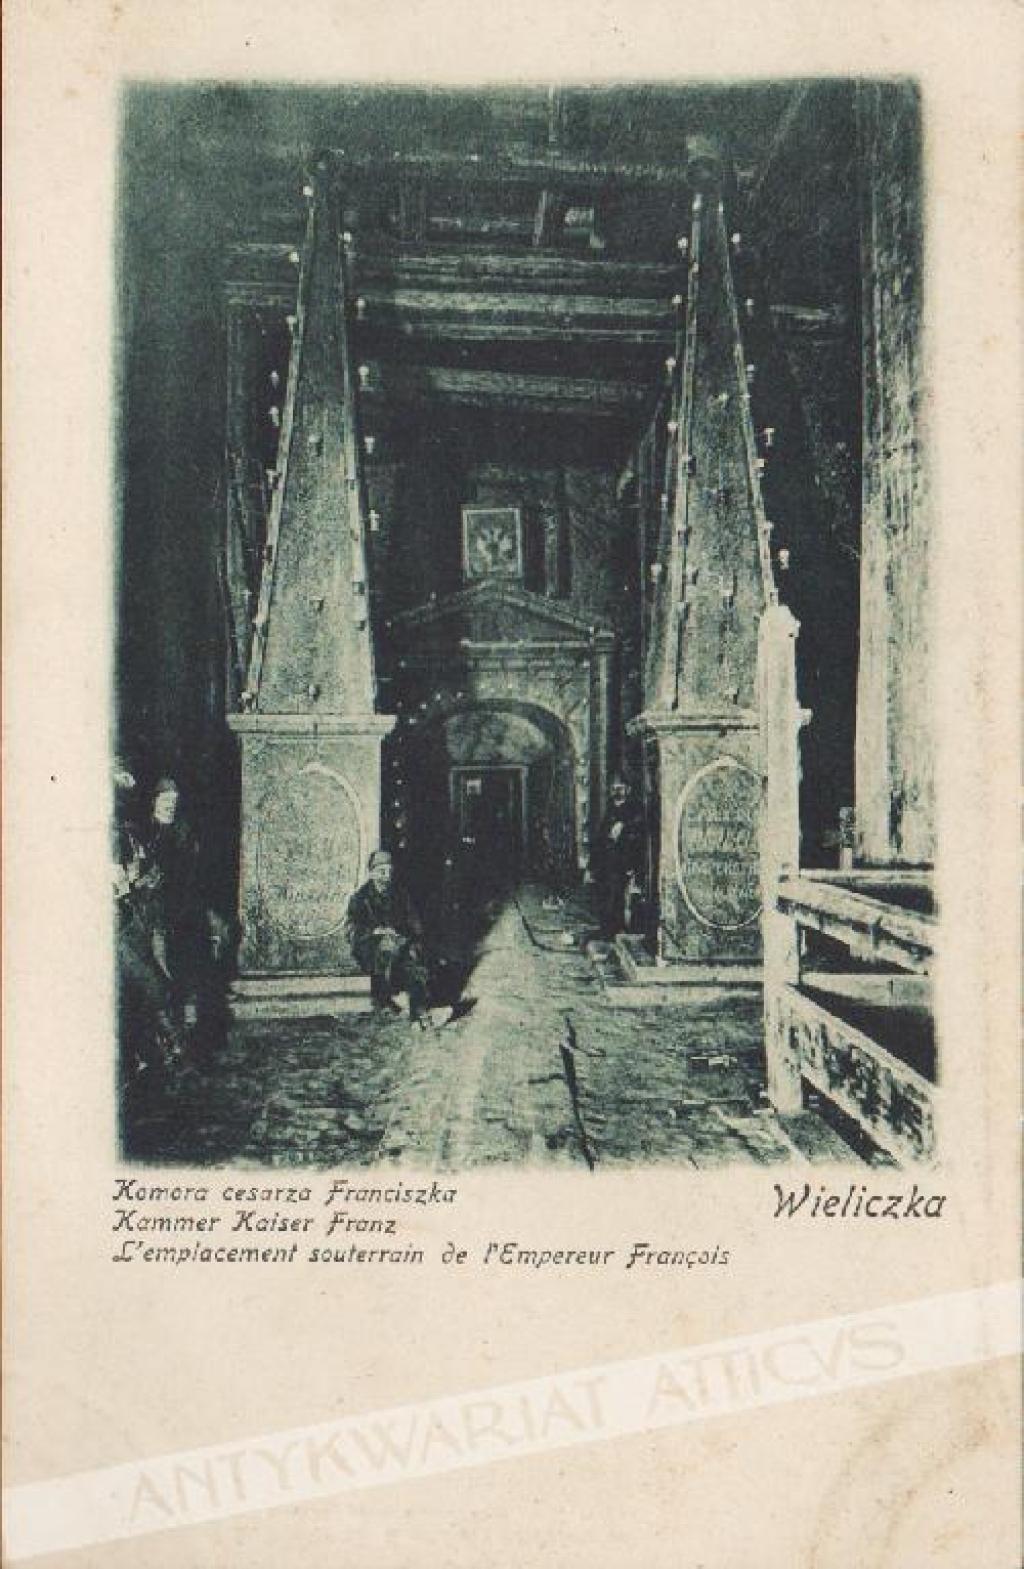 [pocztówka ok. 1900] Wieliczka, Komora cesarza FranciszkaKammer Kaiser FranzL\'emplacement souterrain de l\'Empereur Francois